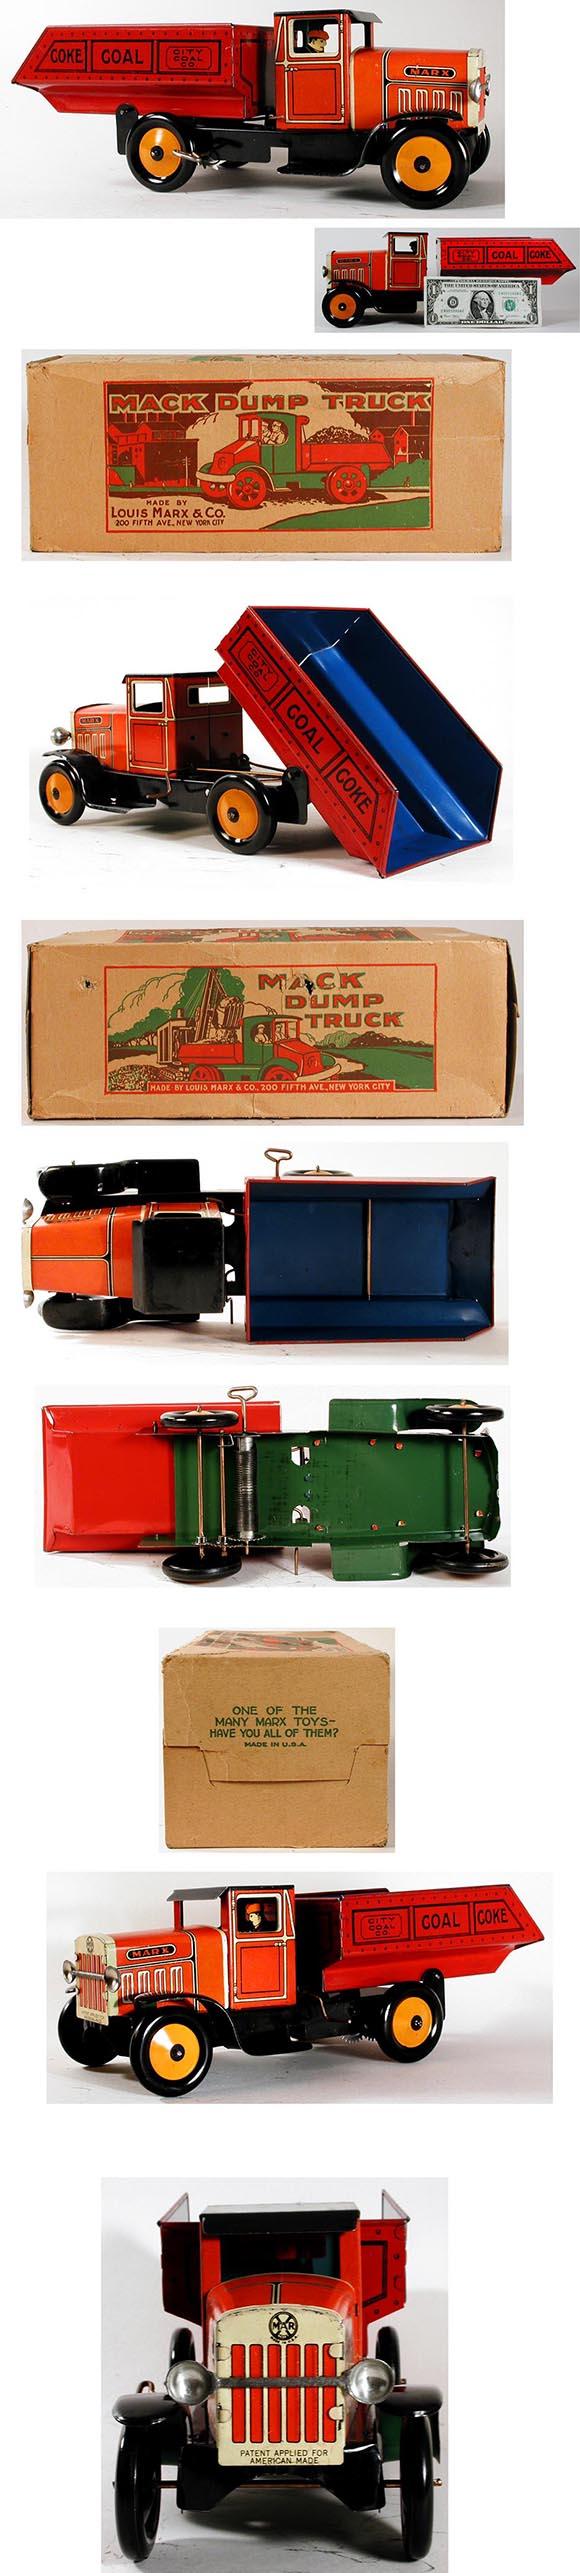 1934 Marx, Mechanical City Coal Co. Dump Truck in Original Box